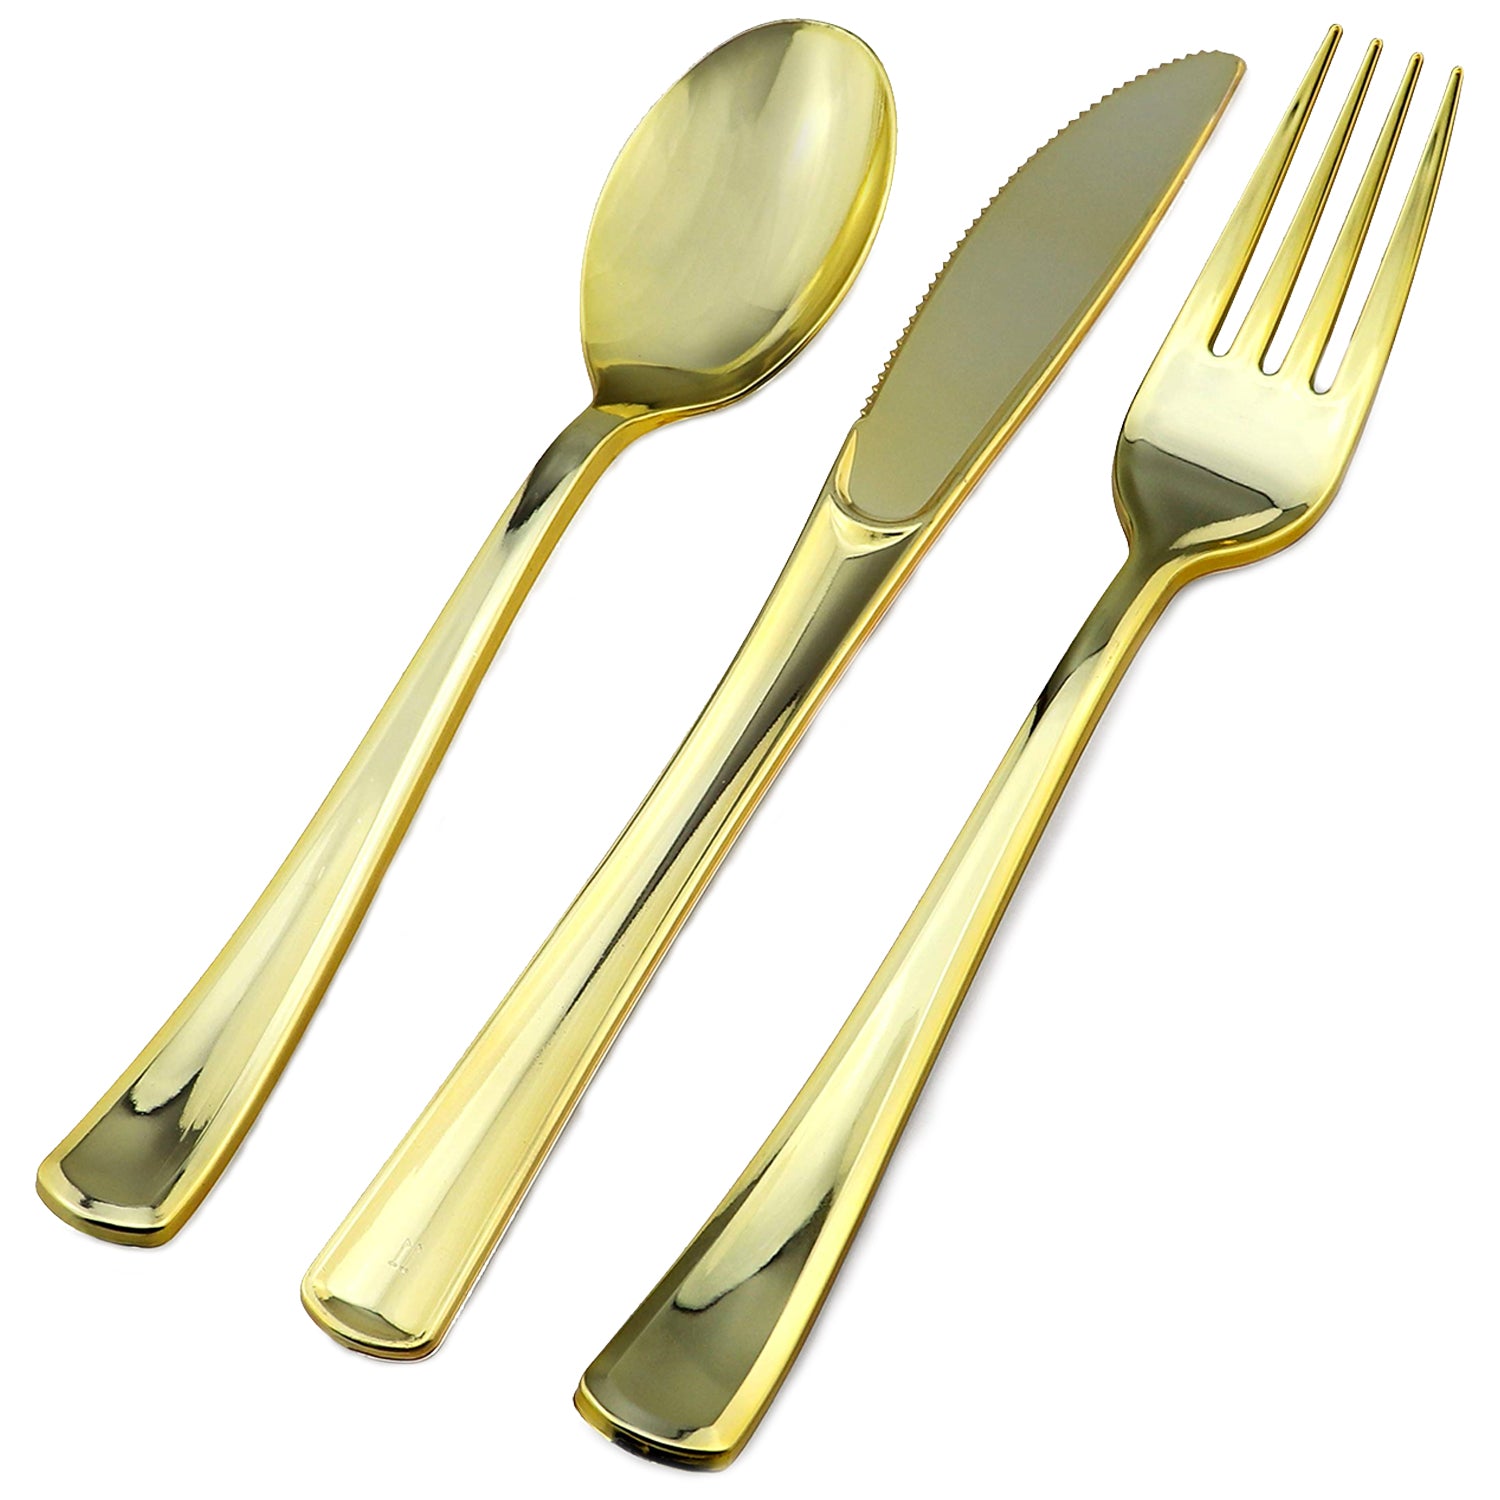 Gold Stroke Black Dinner Plates Tableware Package Plates Decorline   